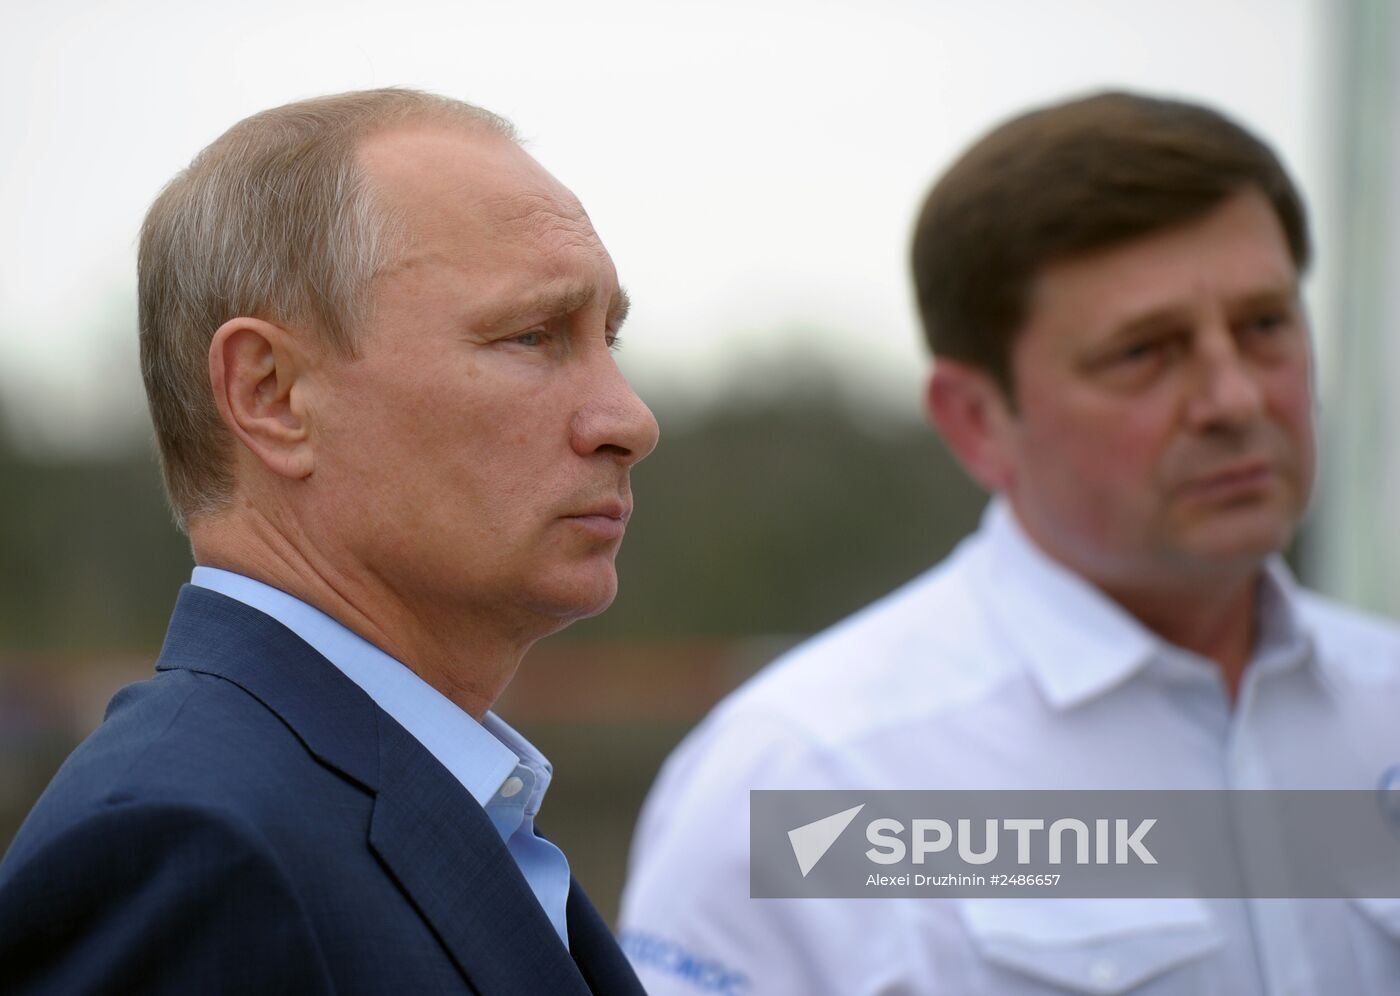 Vladimir Putin's visit to Amur Region